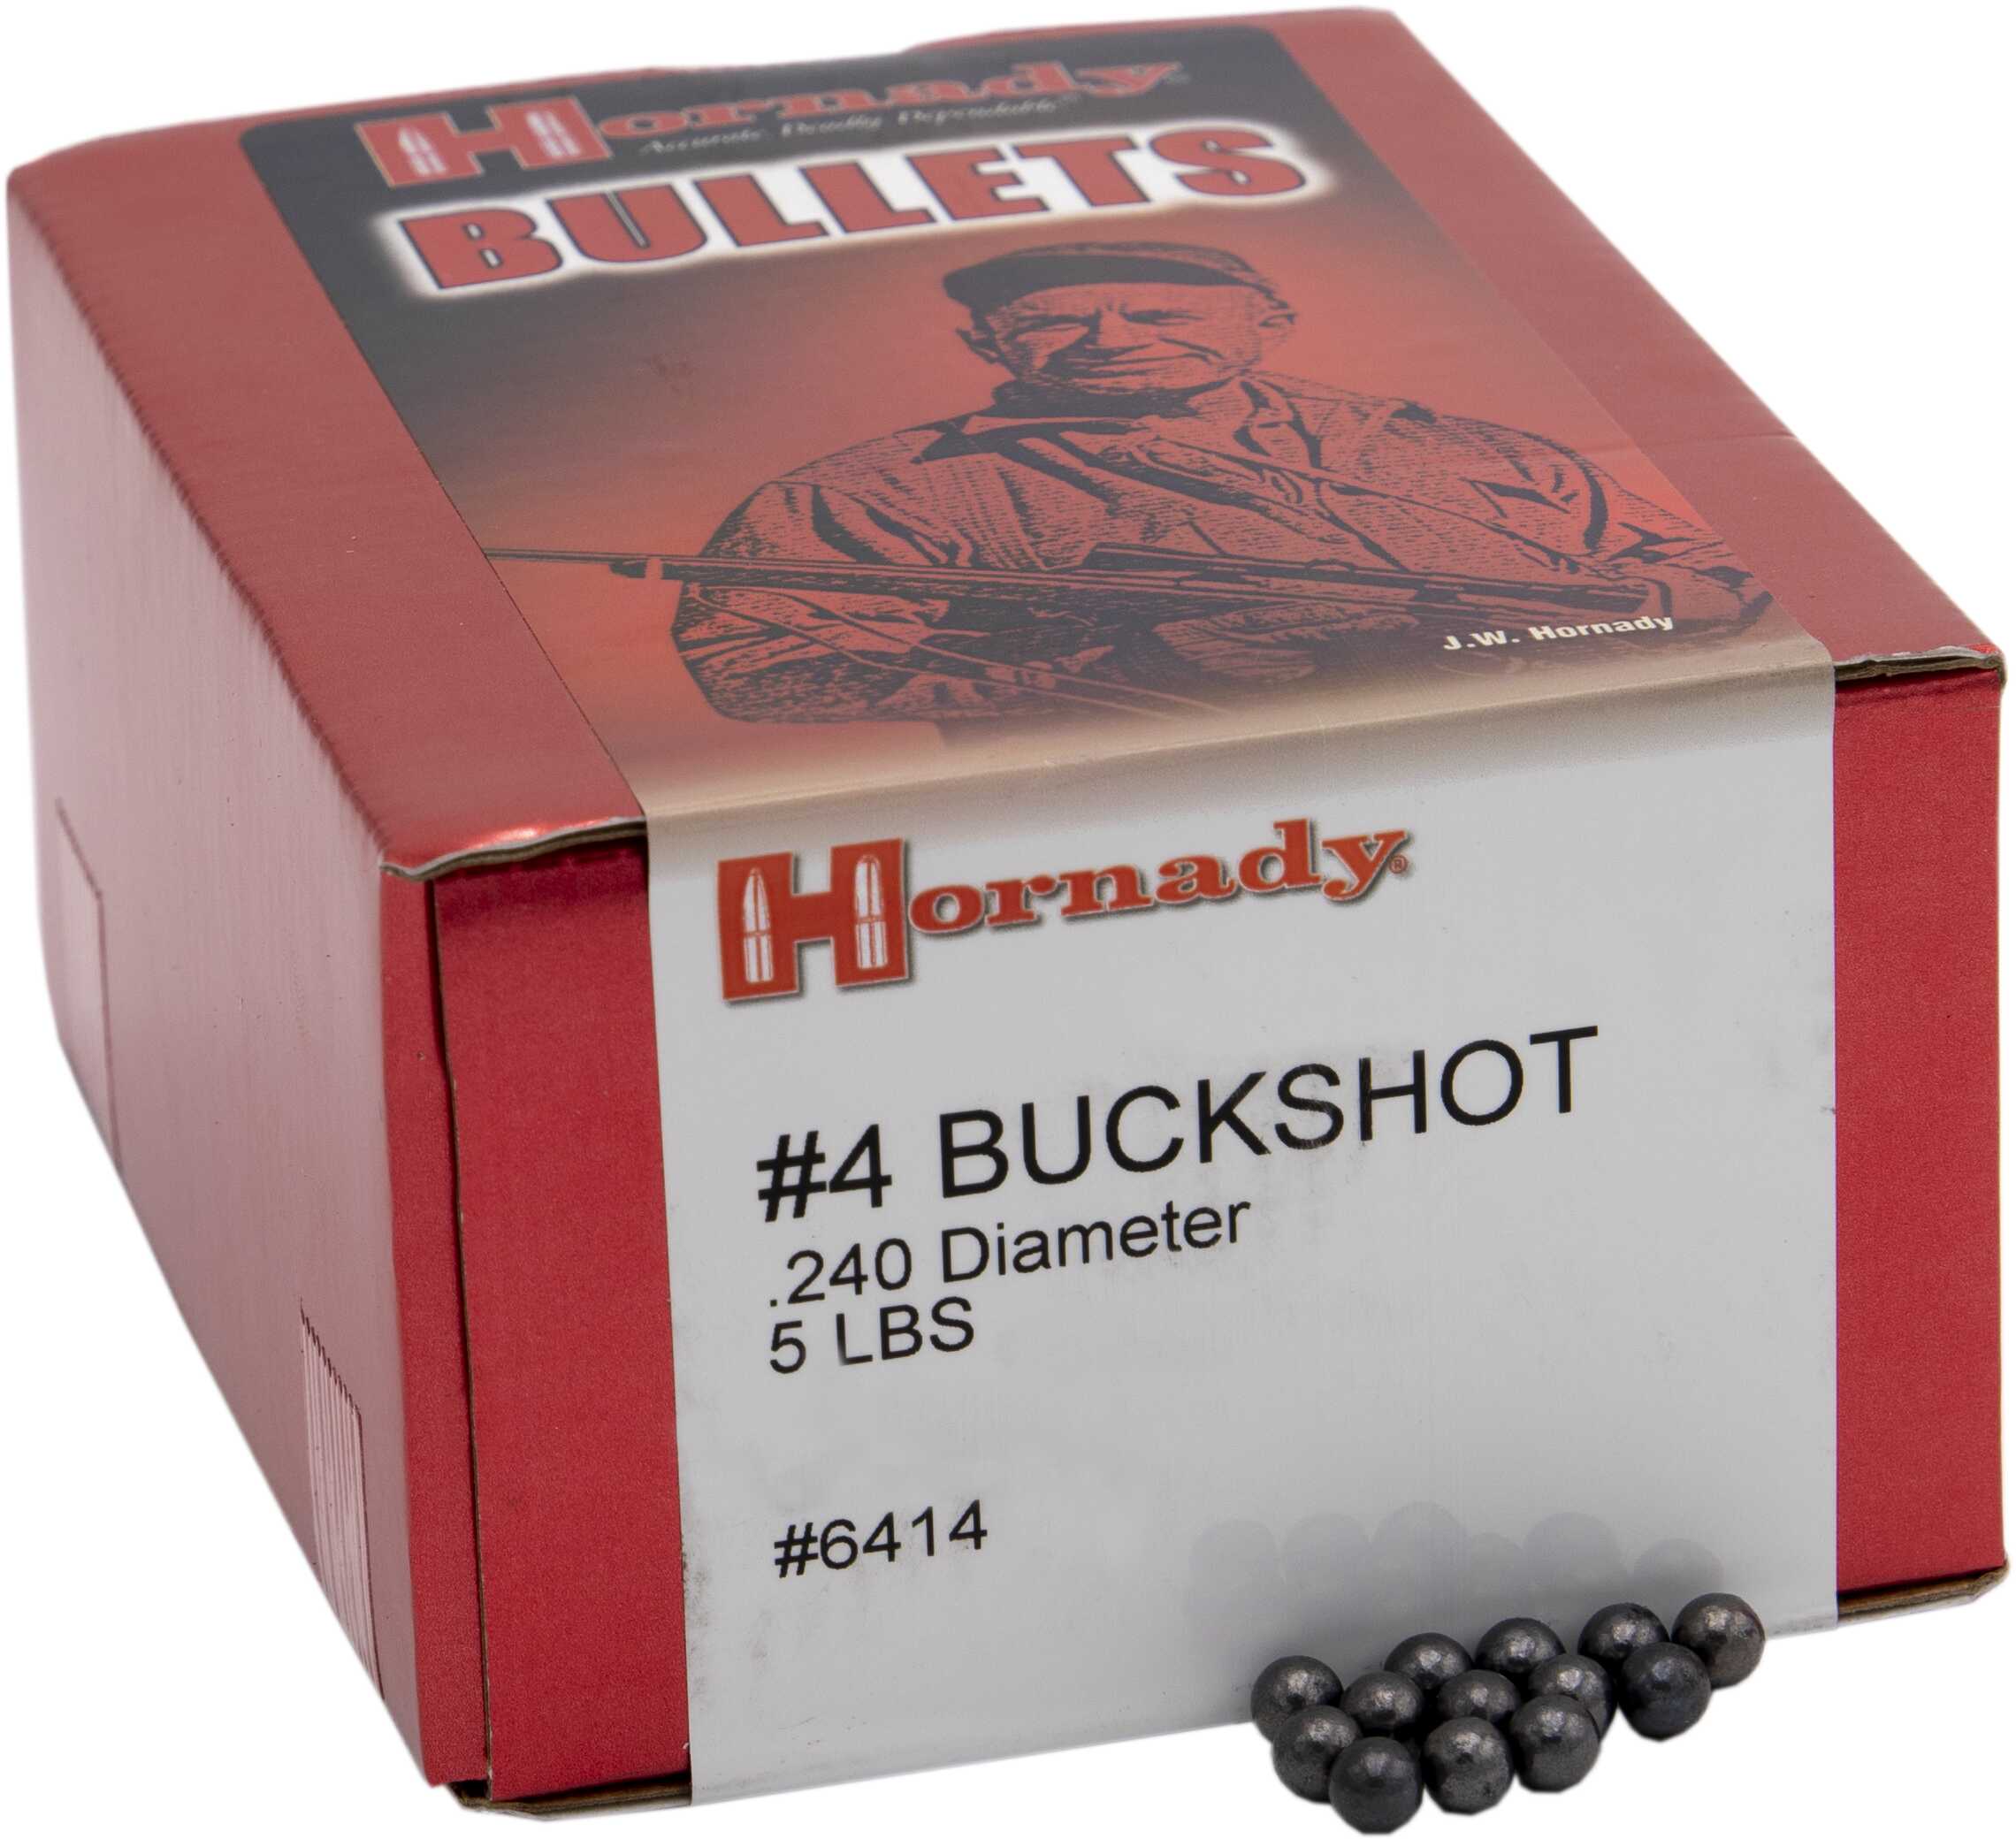 Hornady #4 Buckshot .240 Diameter Lead Reloading Shotgun Component Md: HDY6414